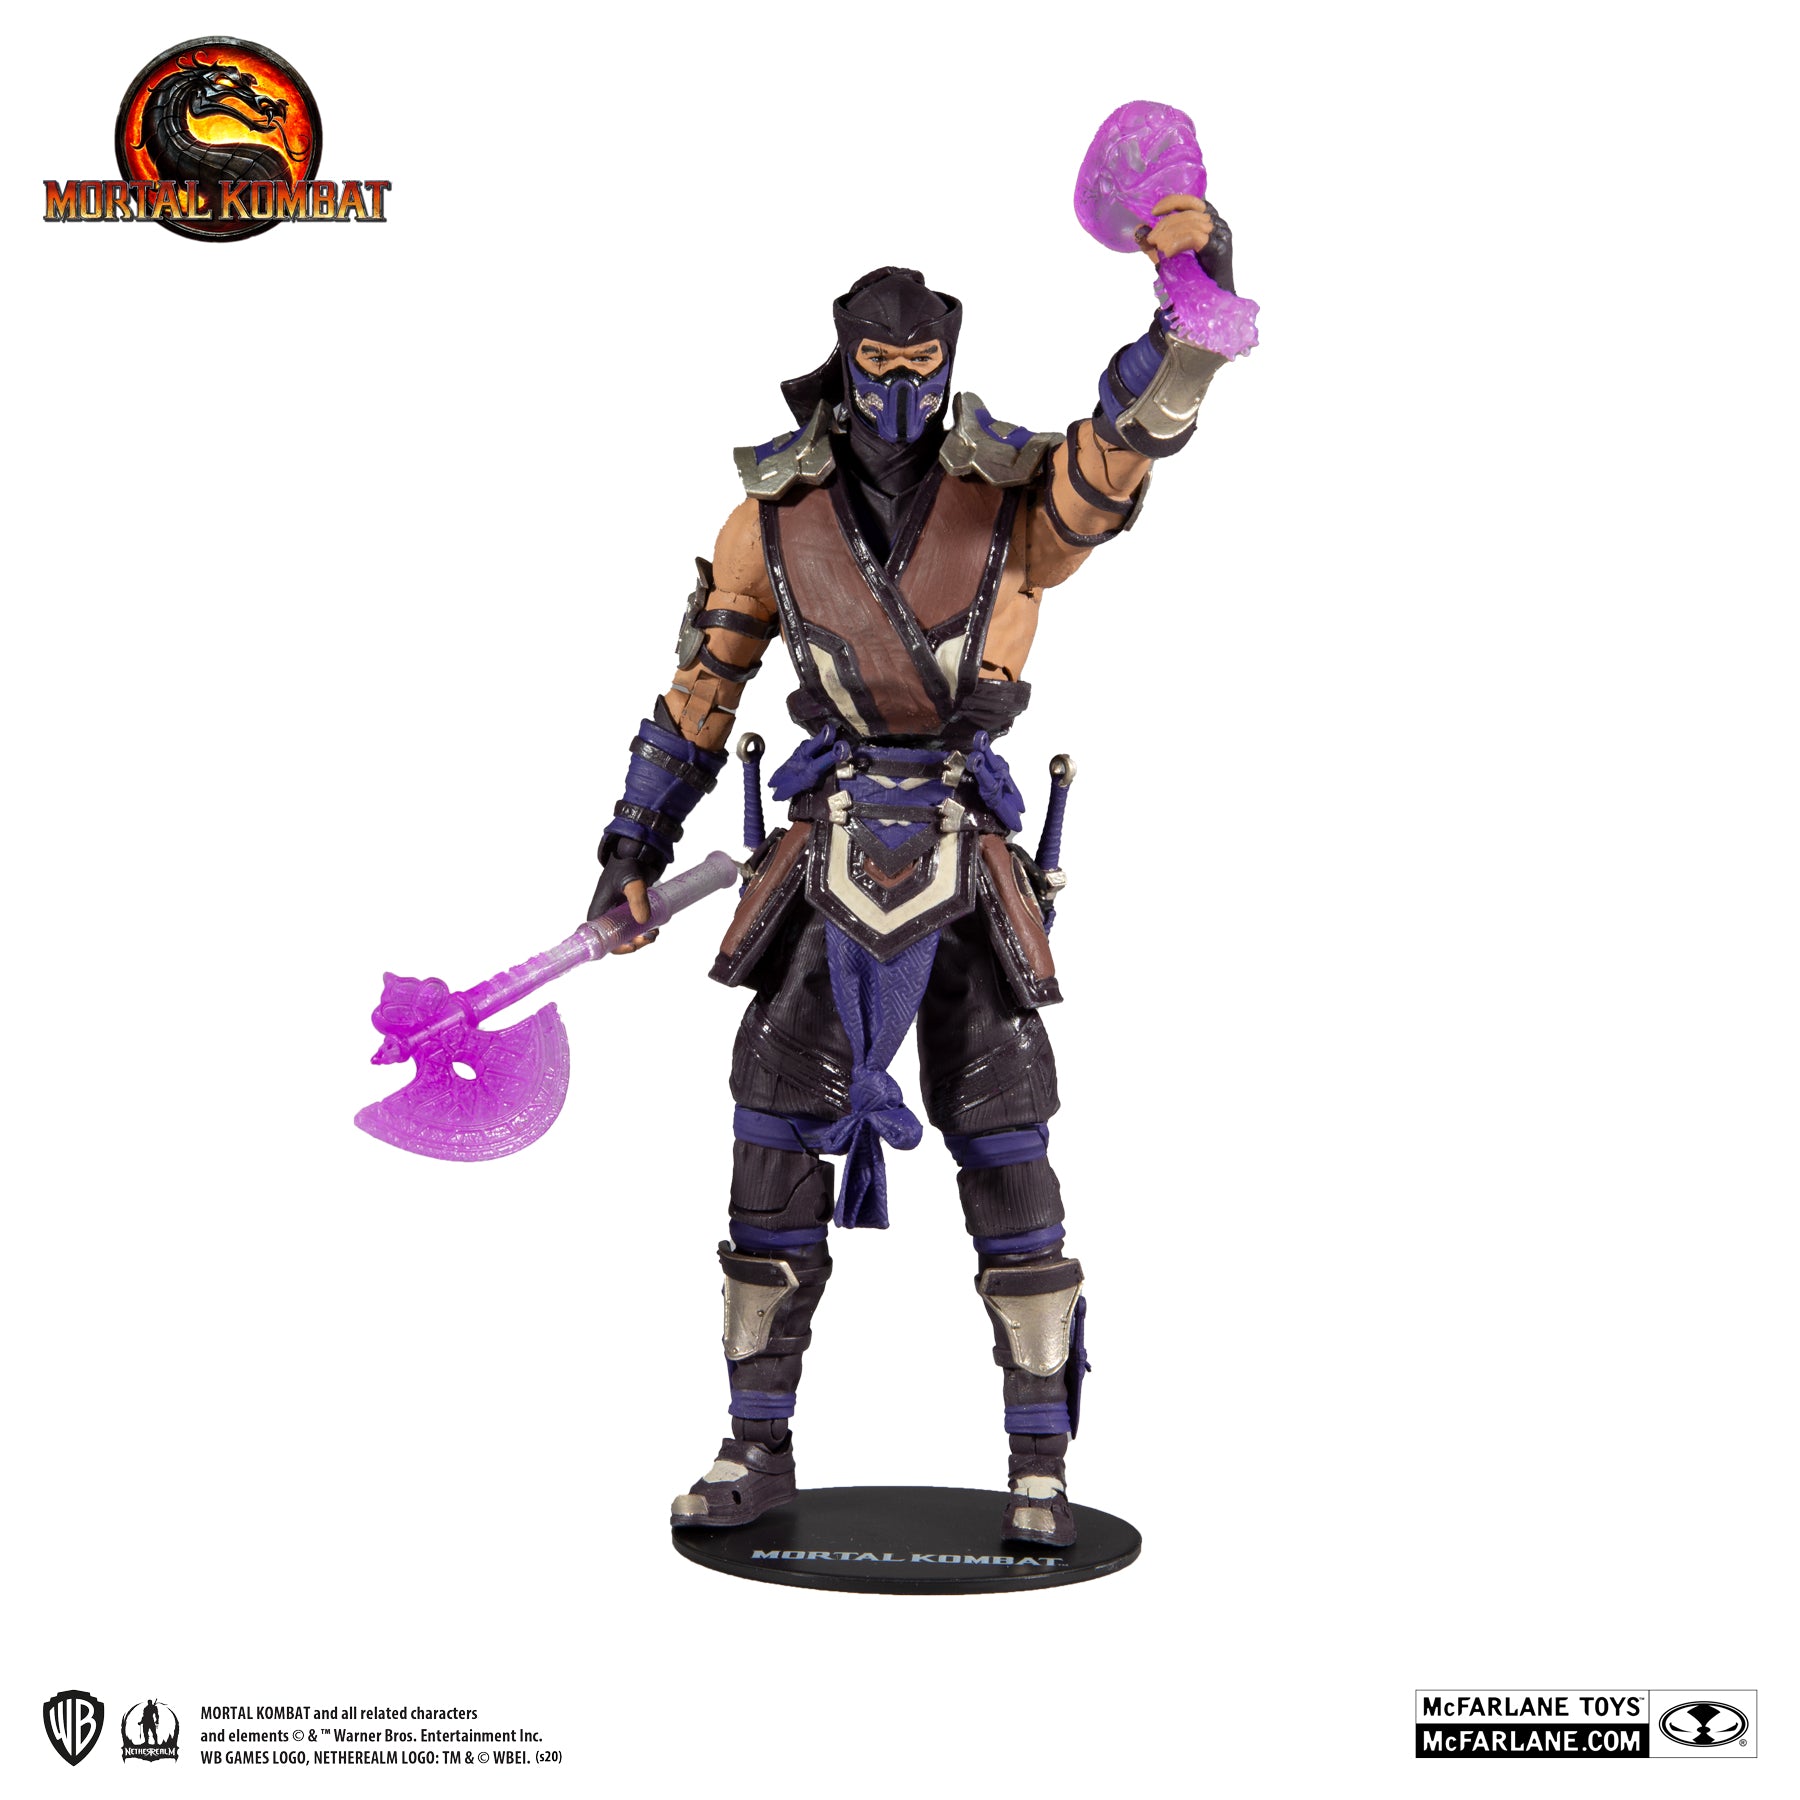 Mortal Kombat V Sub-Zero Winter Purple Skin 7" Figure - McFarlane Toys